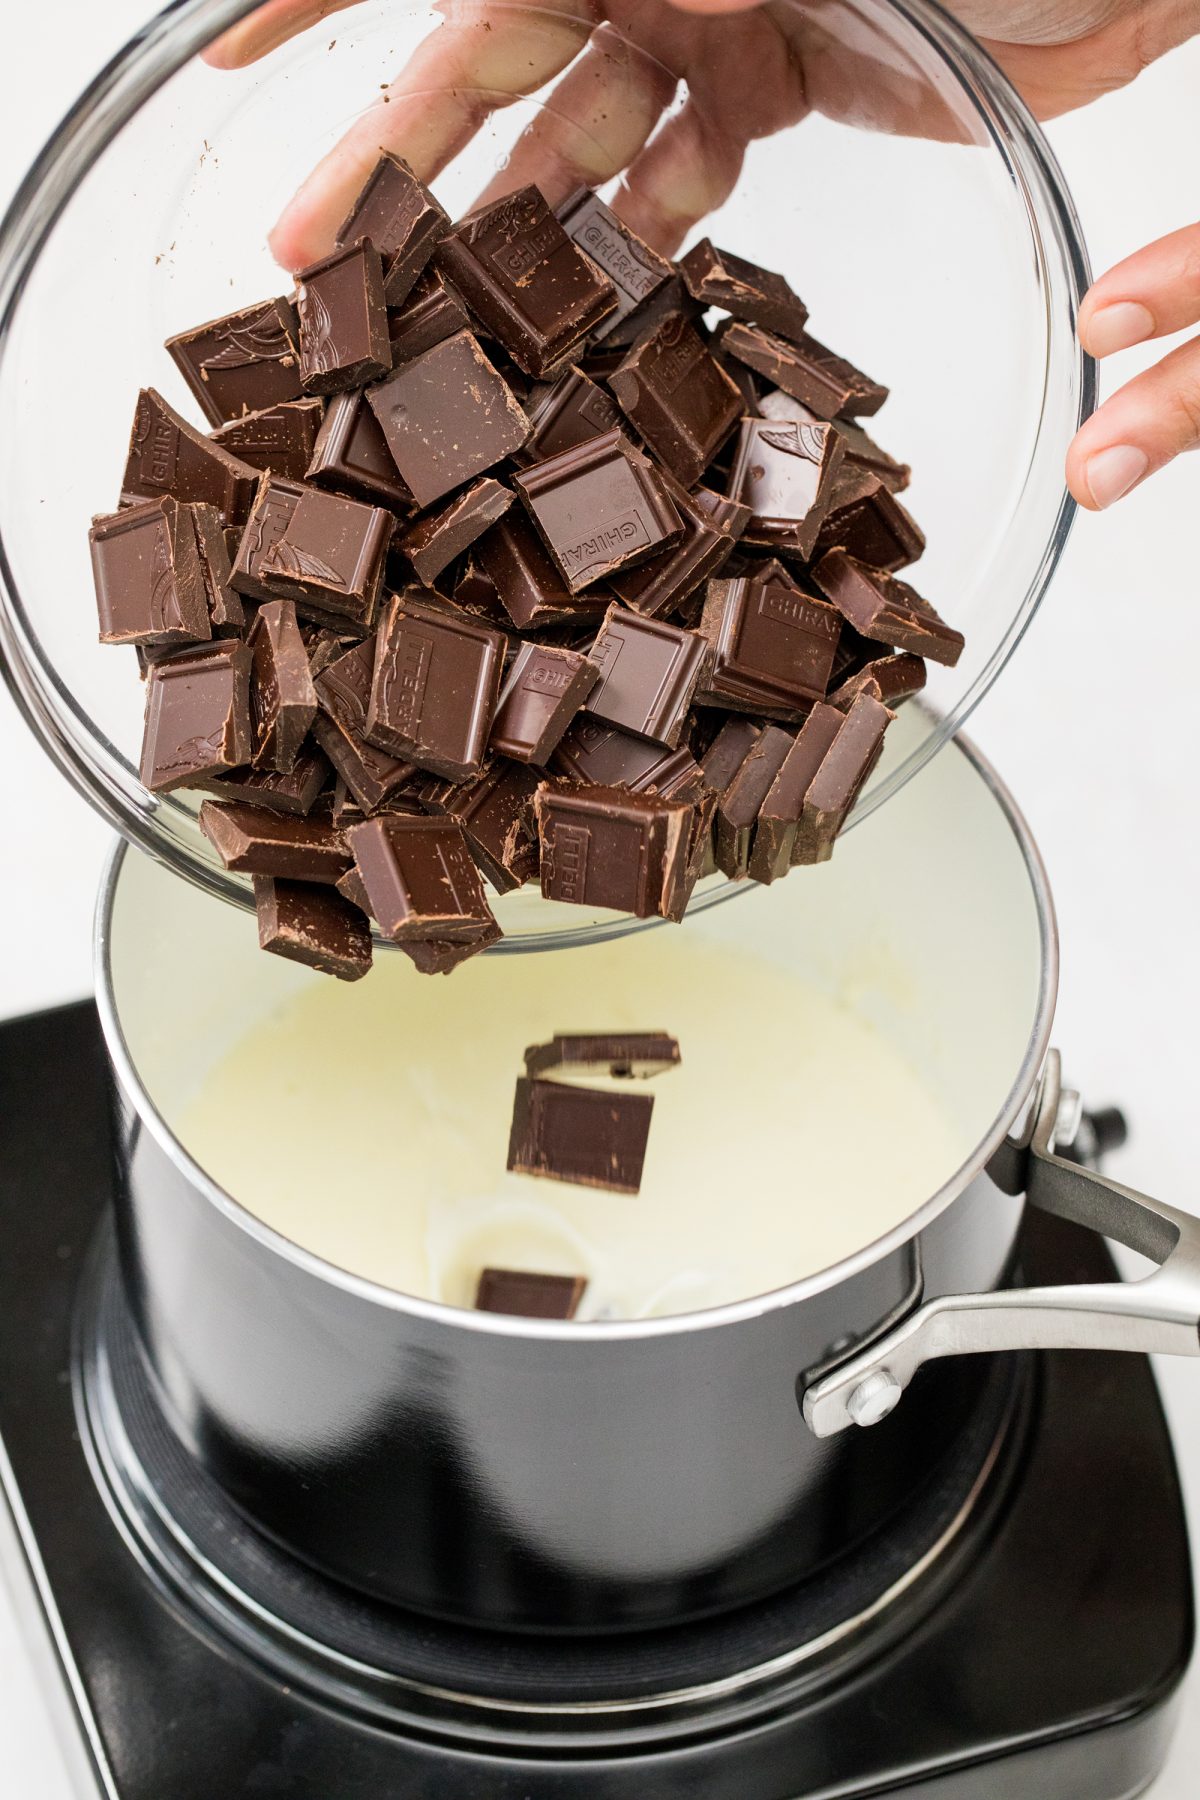 Adding chocolate bar chunks to the pot